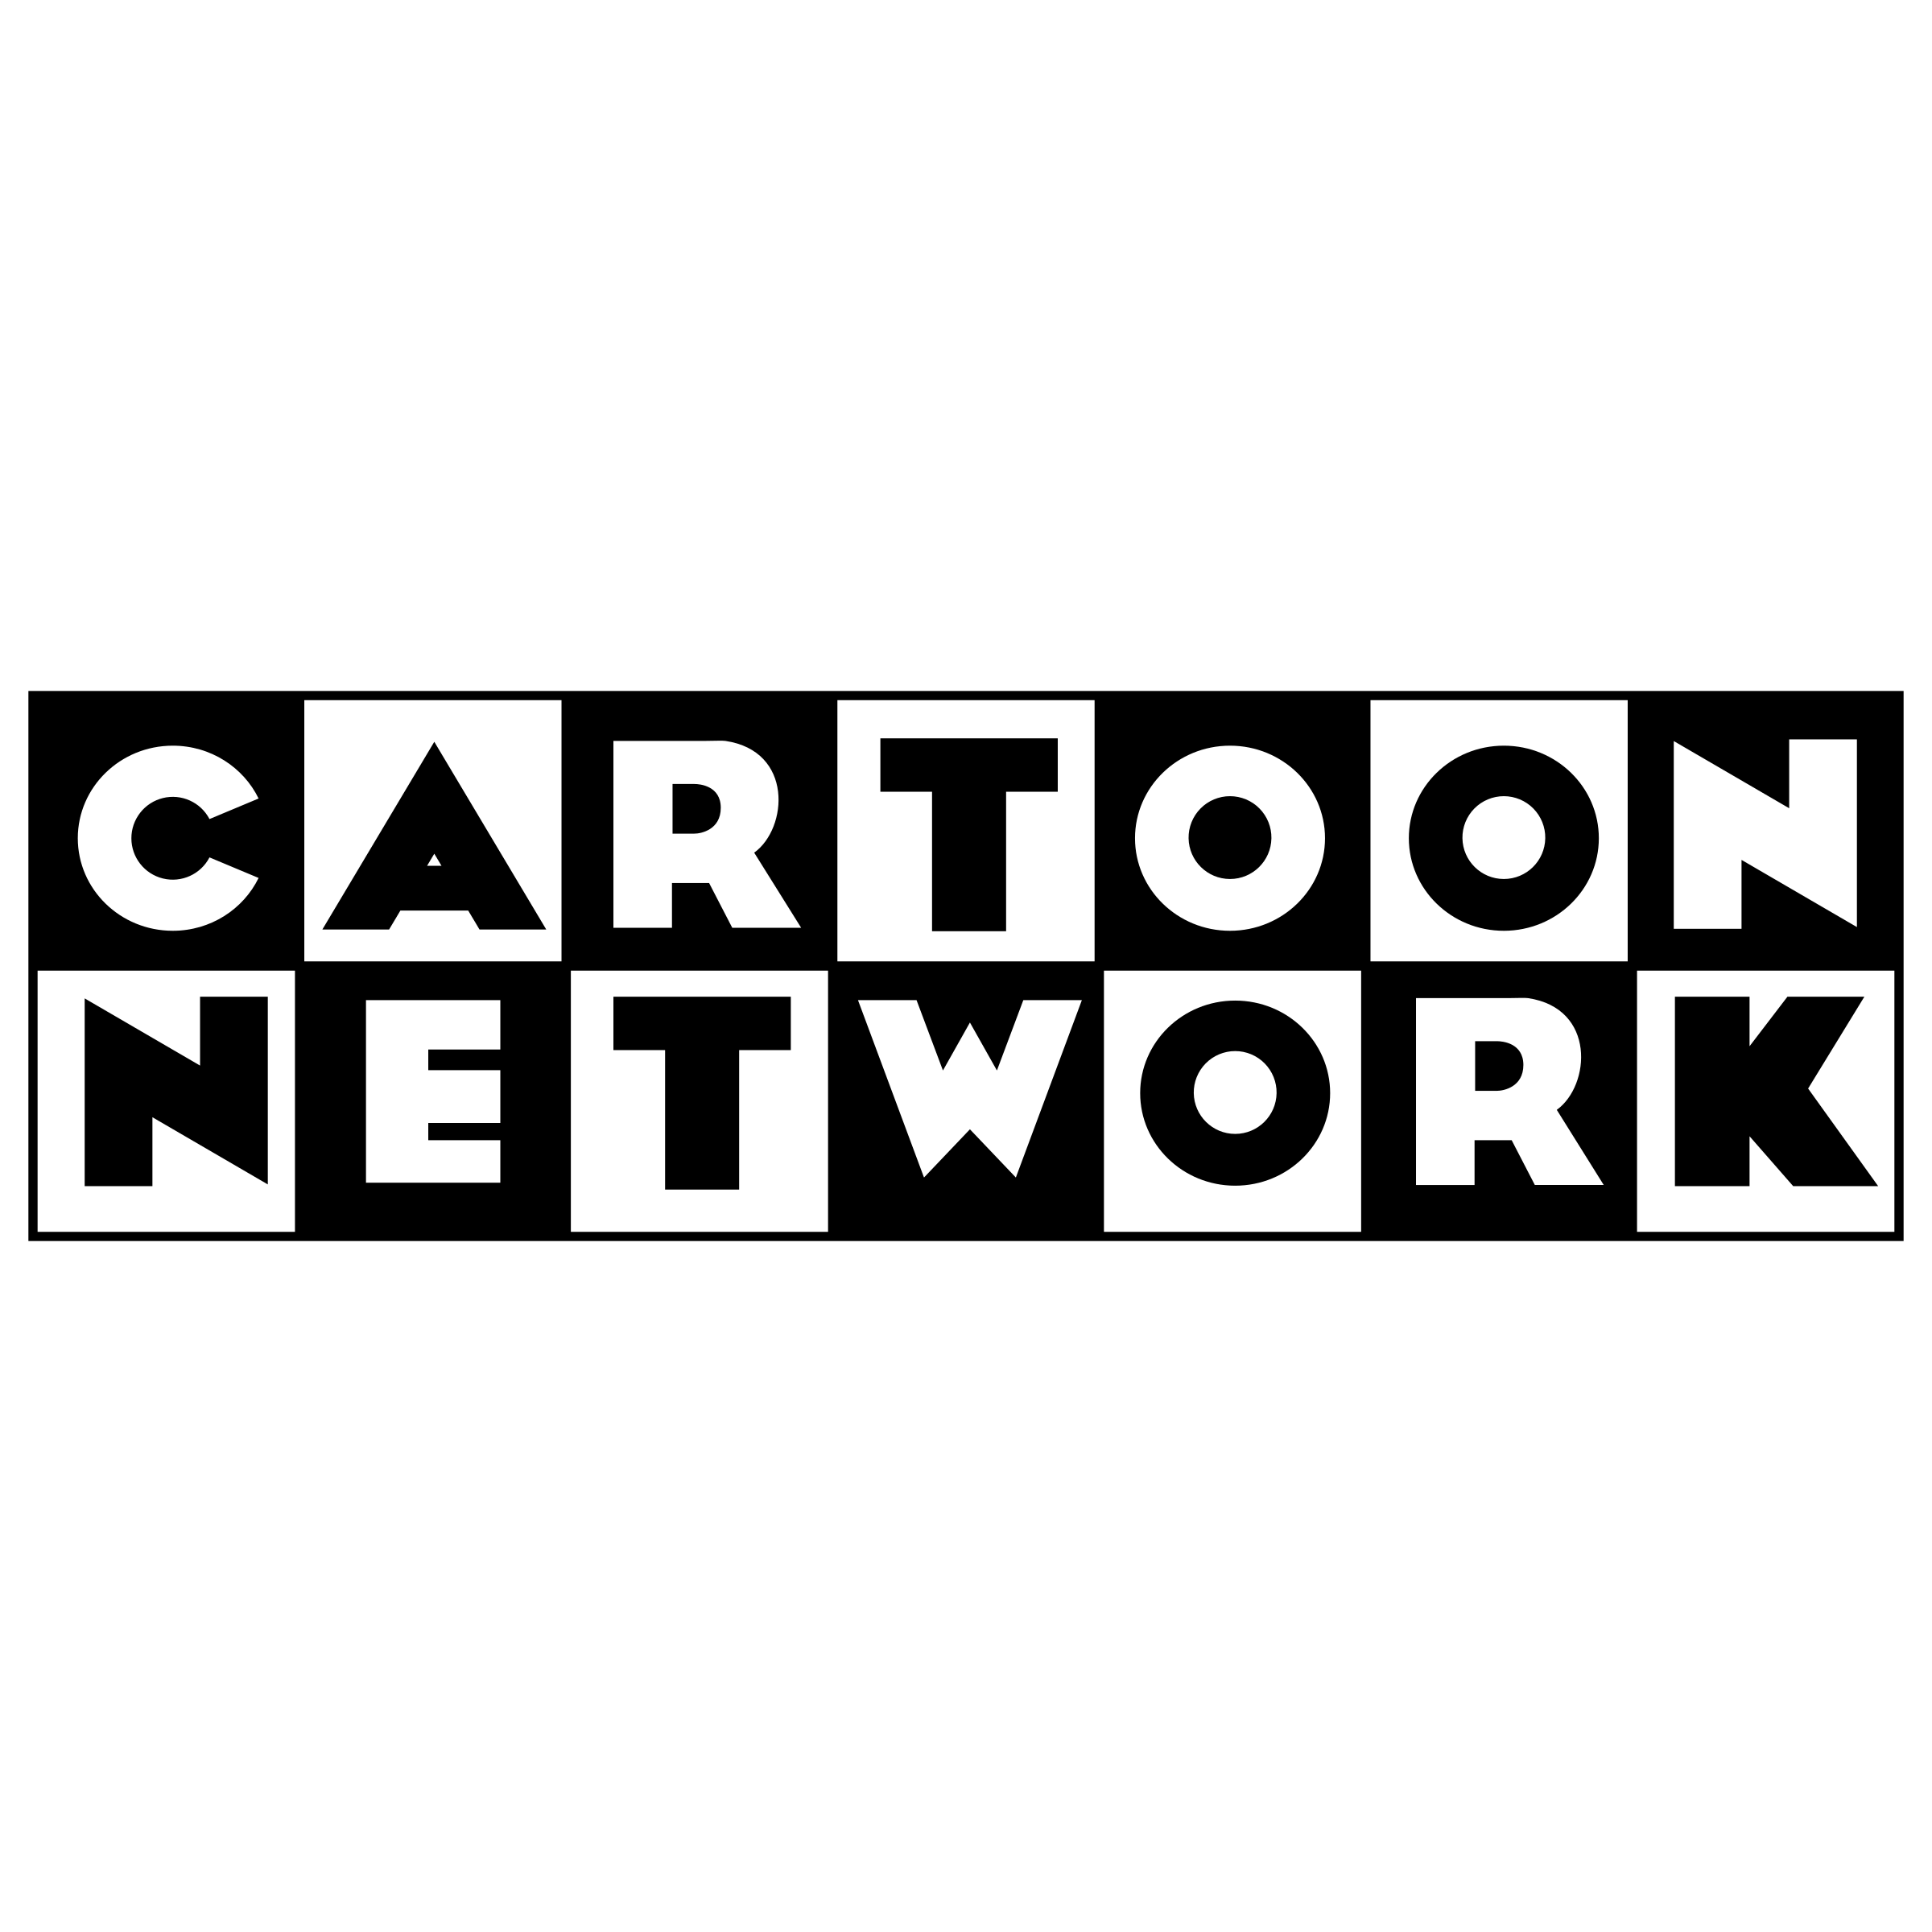 Cartoon Network Logo - Cartoon Network Logo PNG Transparent & SVG Vector - Freebie Supply